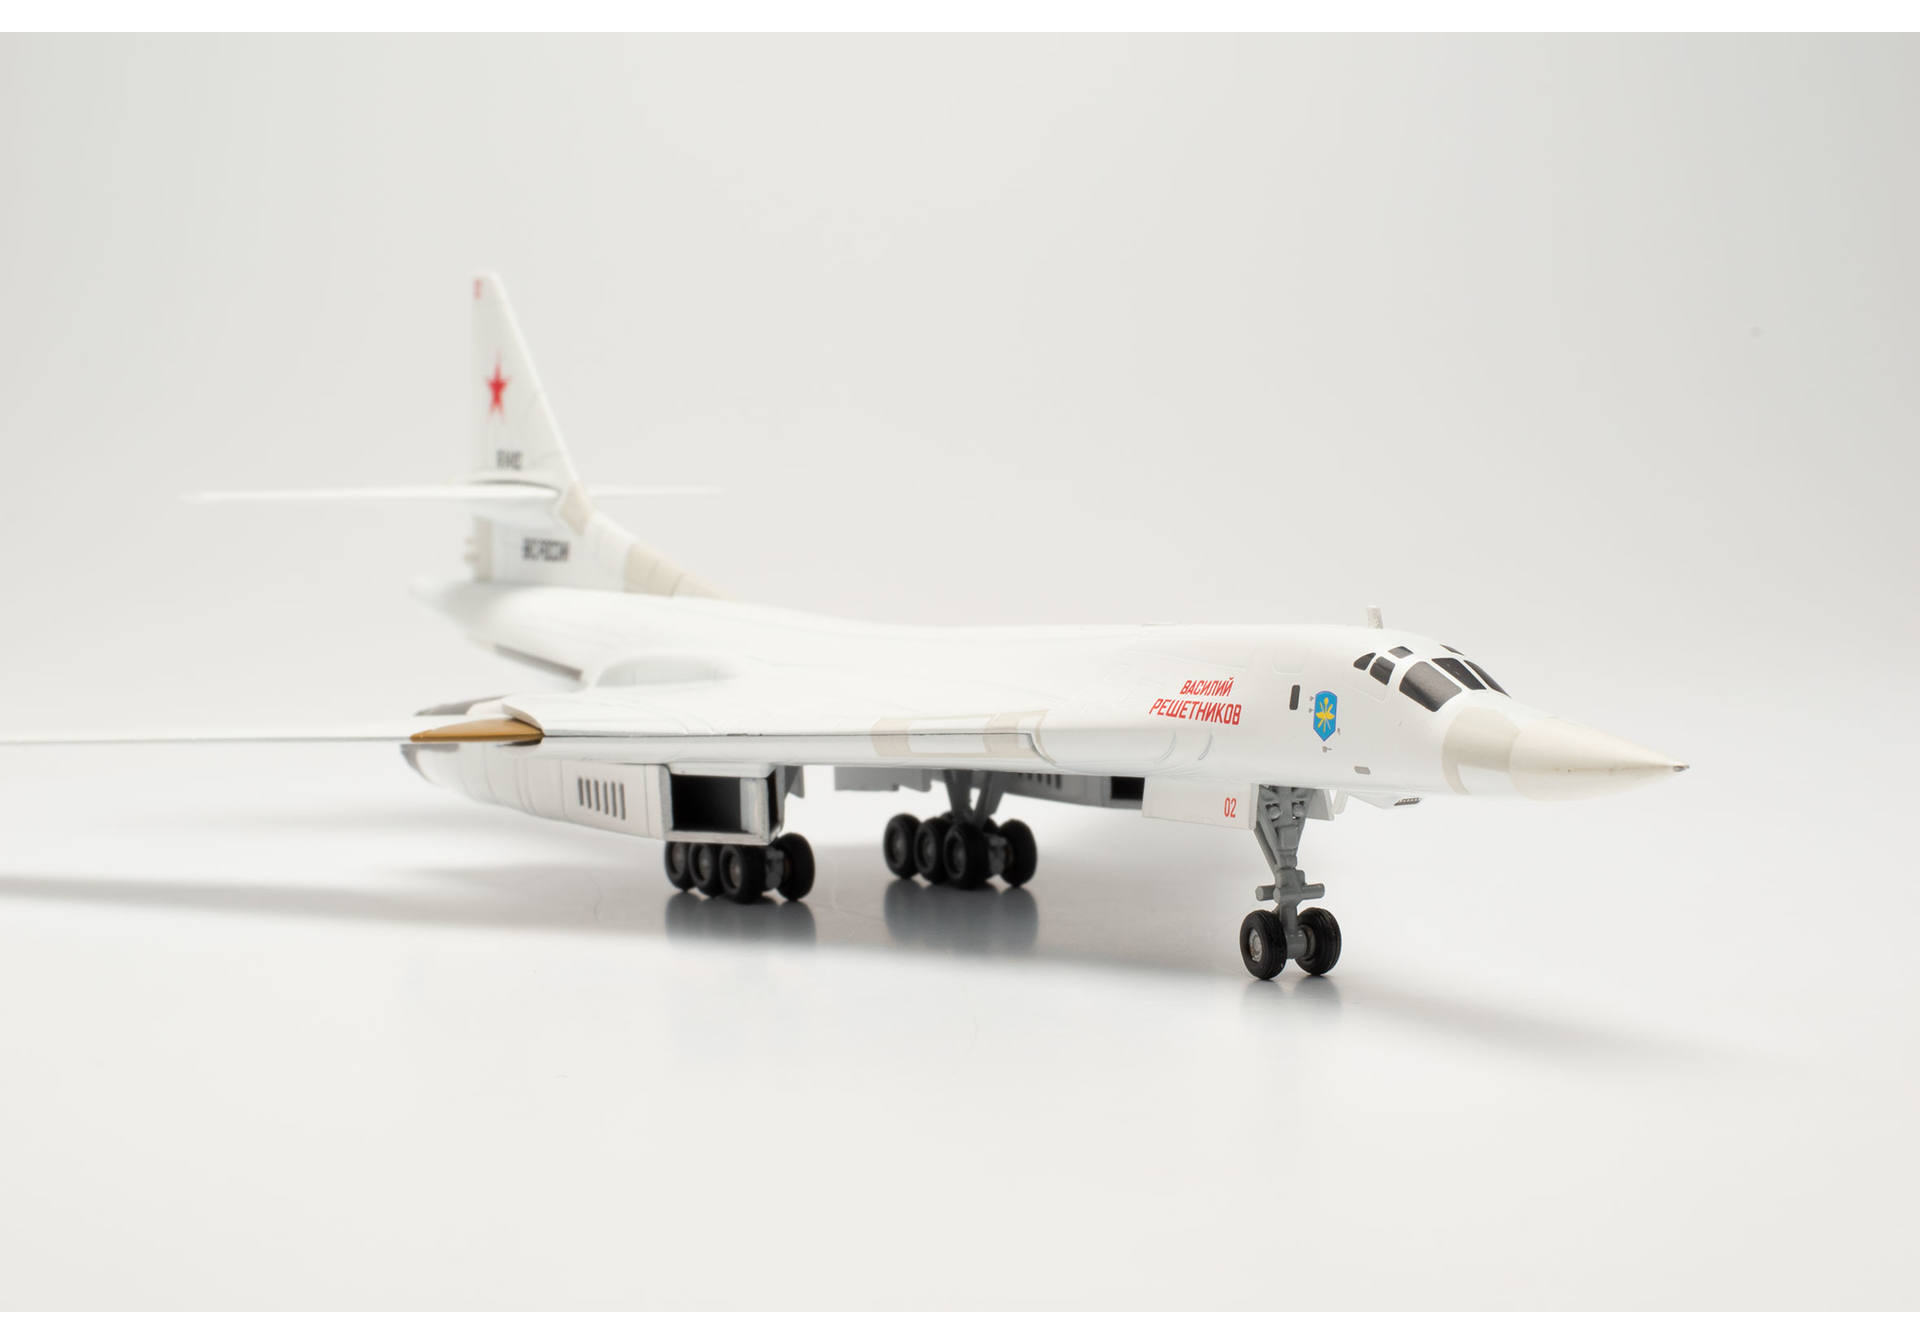 Russian Air Force Tupolev TU-160 “Blackjack” / “White Swan” - RF-94102 / 02 red